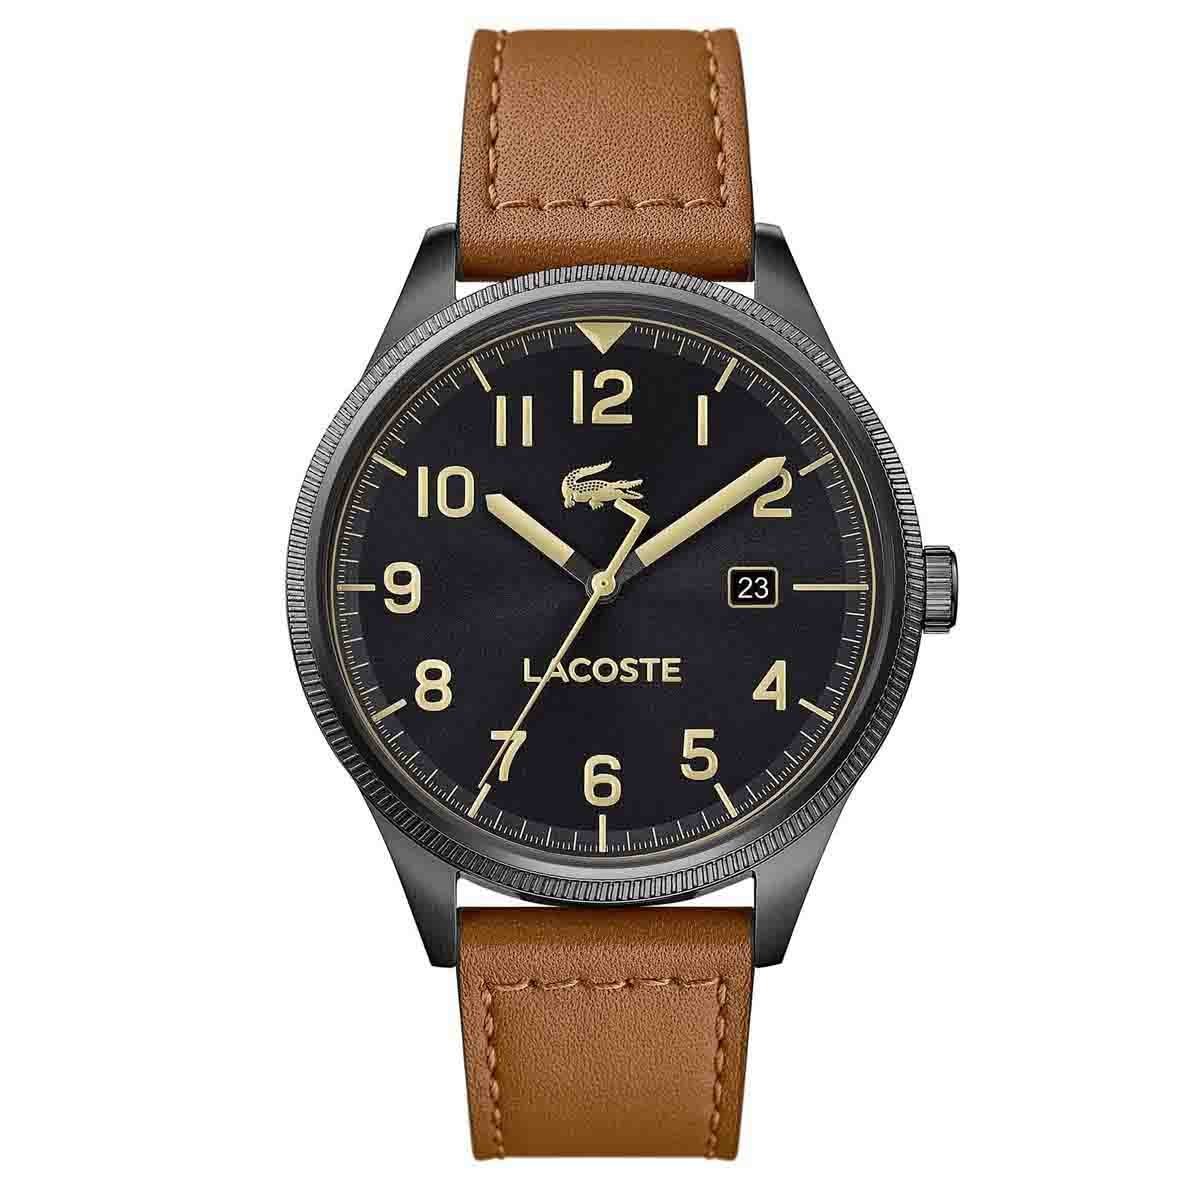 Reloj para Caballero Continental Color Café Lacoste